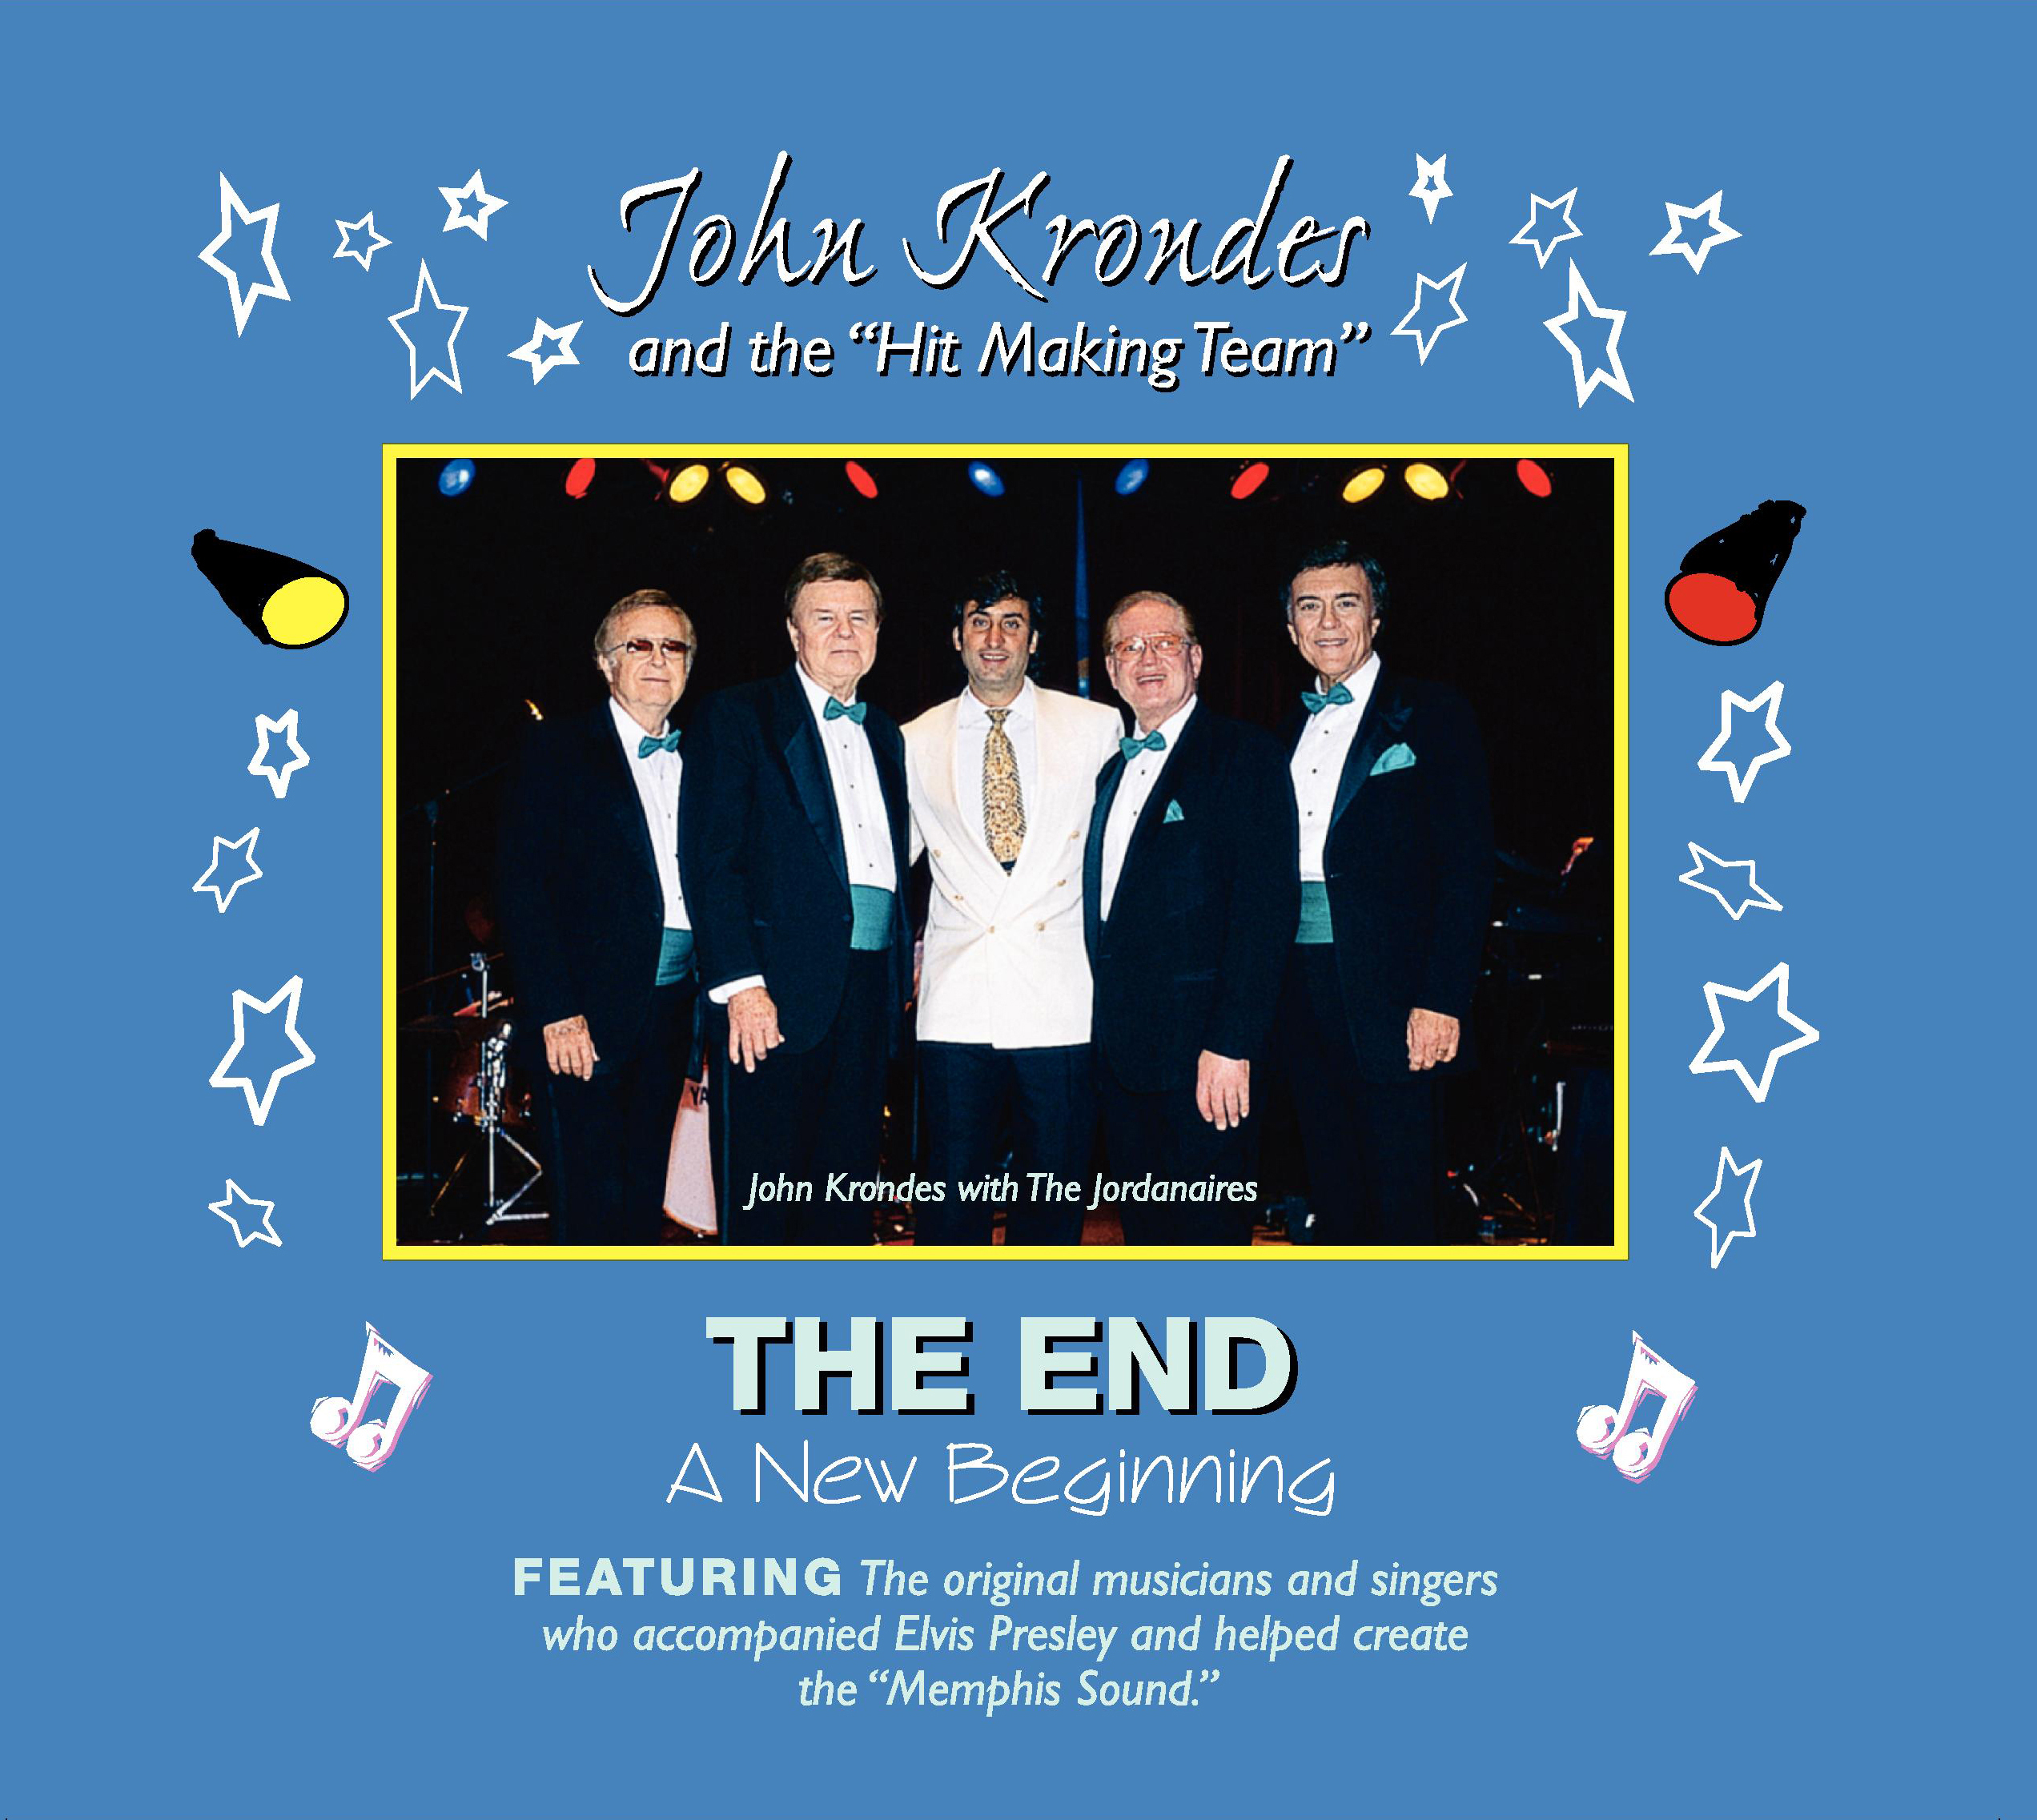 John Krondes & The Jordanaires